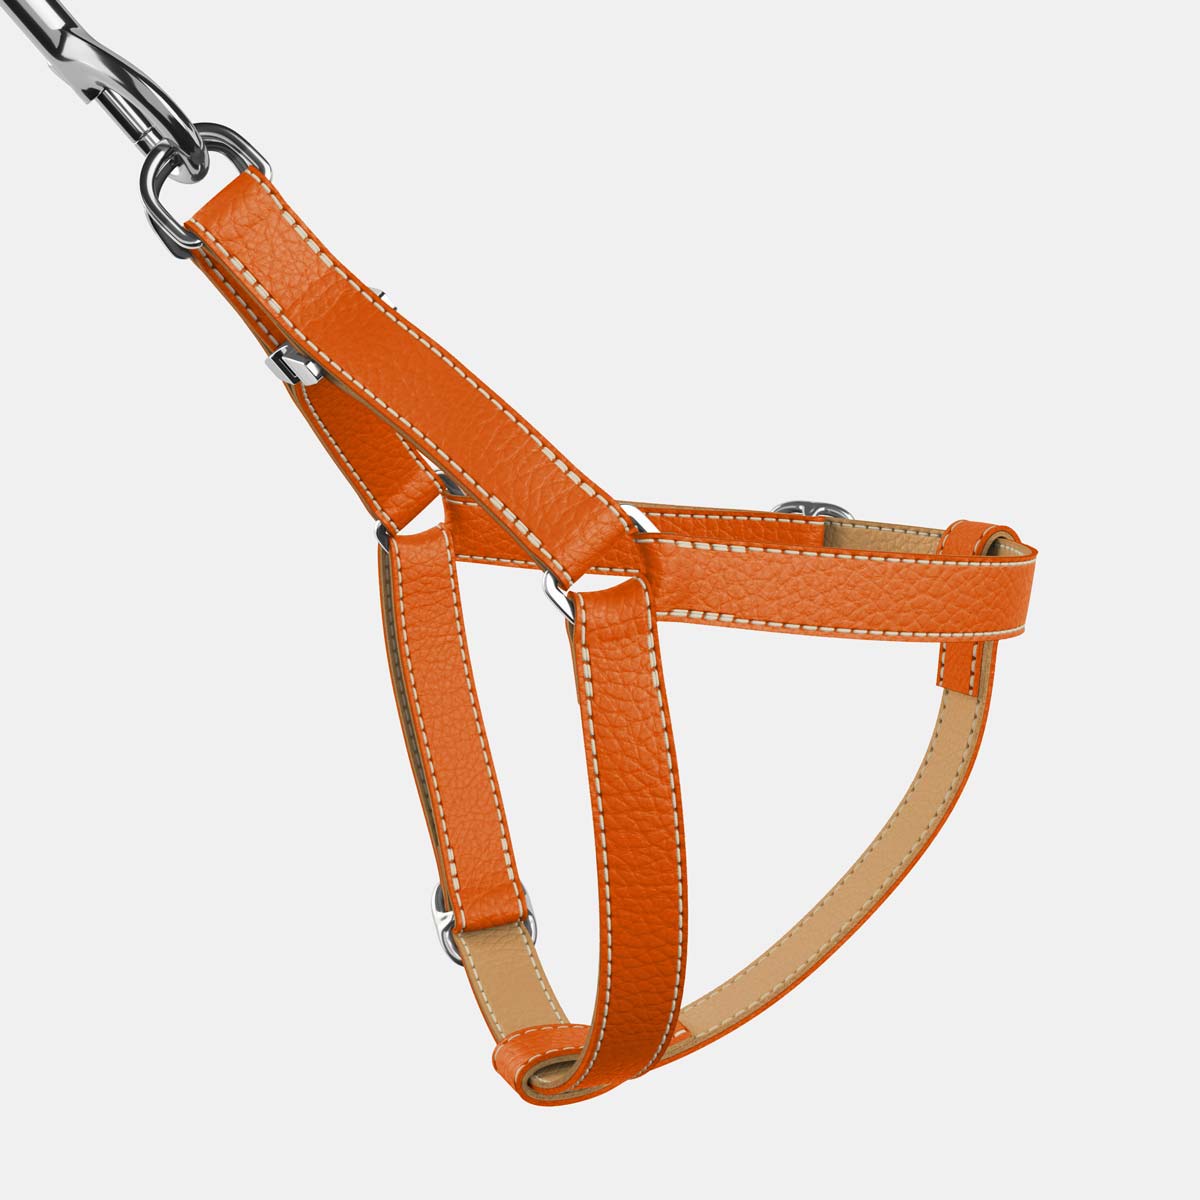 Leather Dog Harness - Orange and Beige - RYAN London